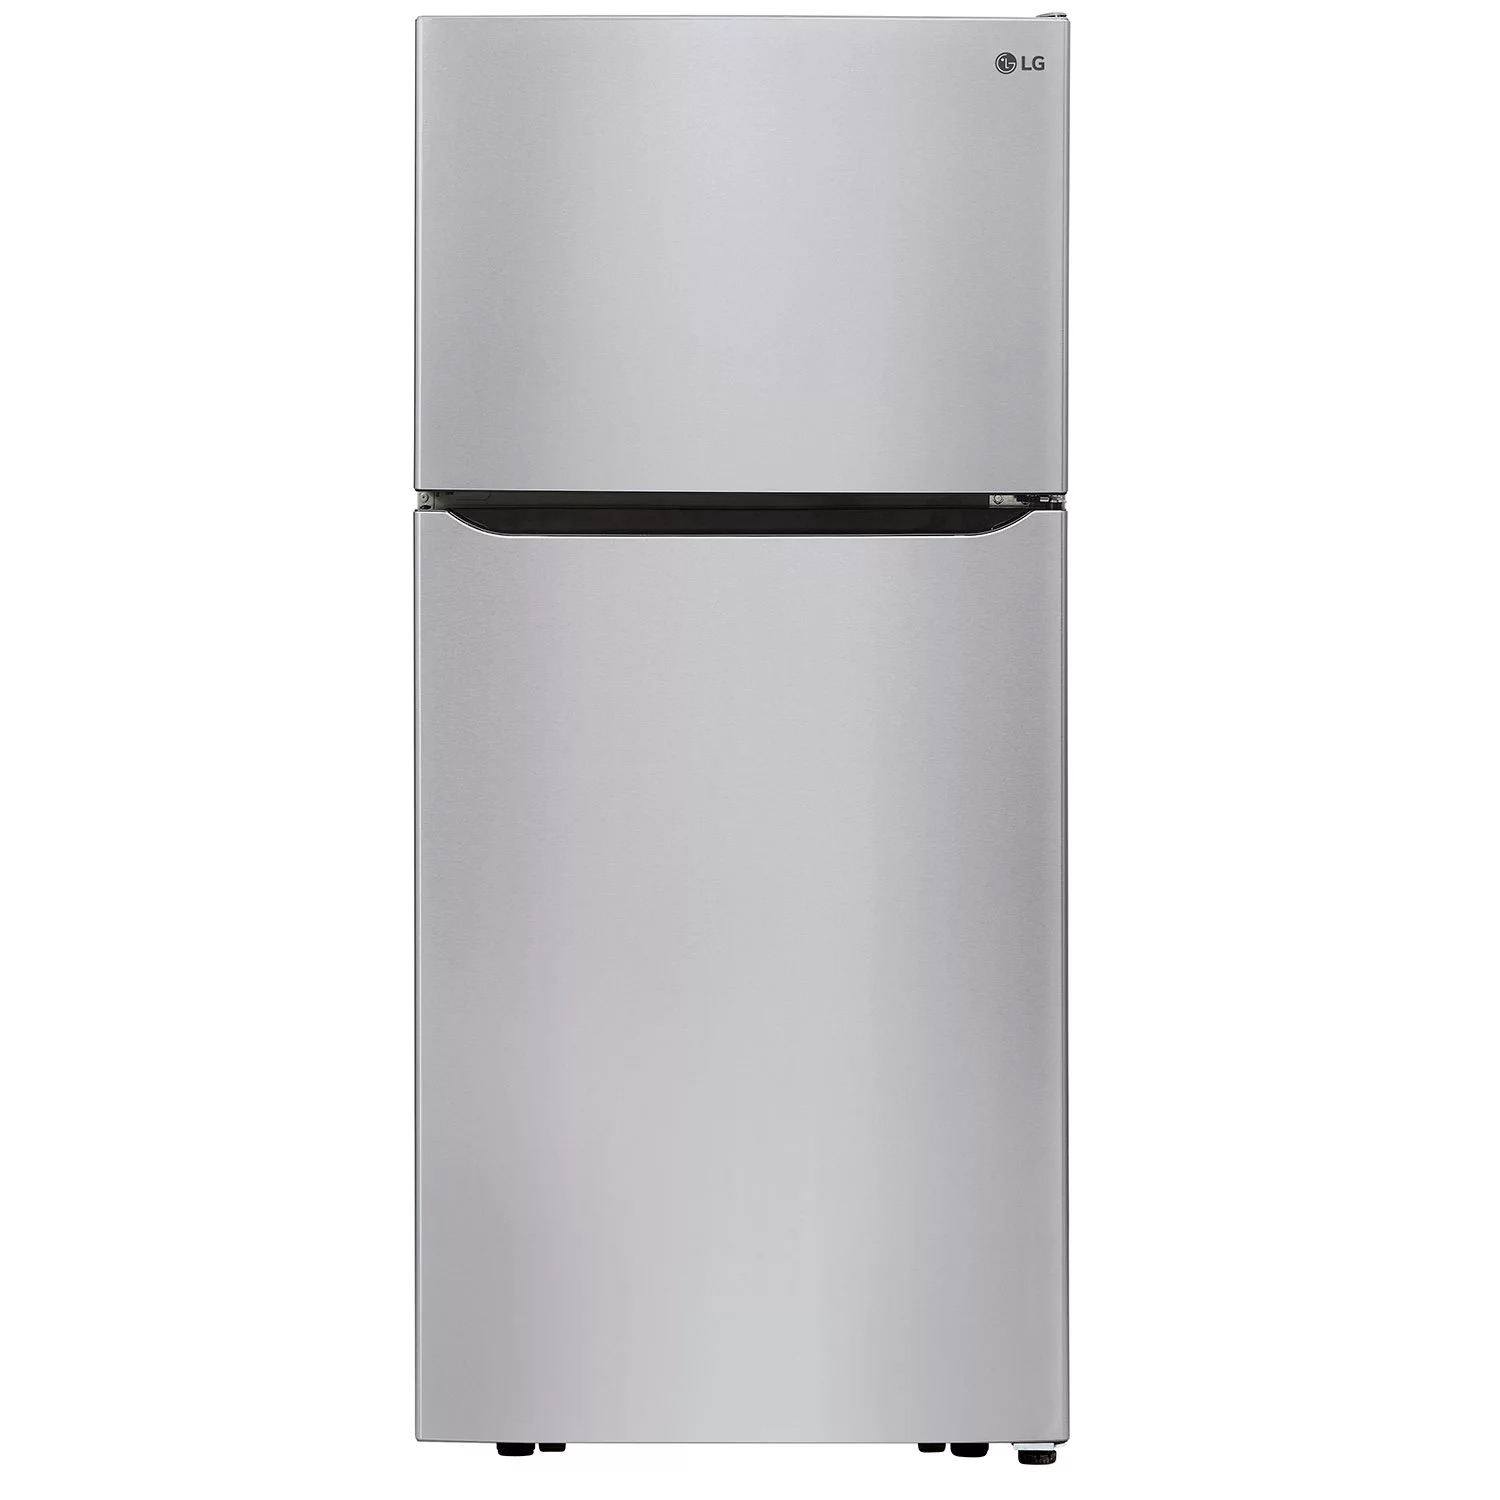 LG 20 Cu. Ft. Top Freezer Refrigerator - Sam's Club